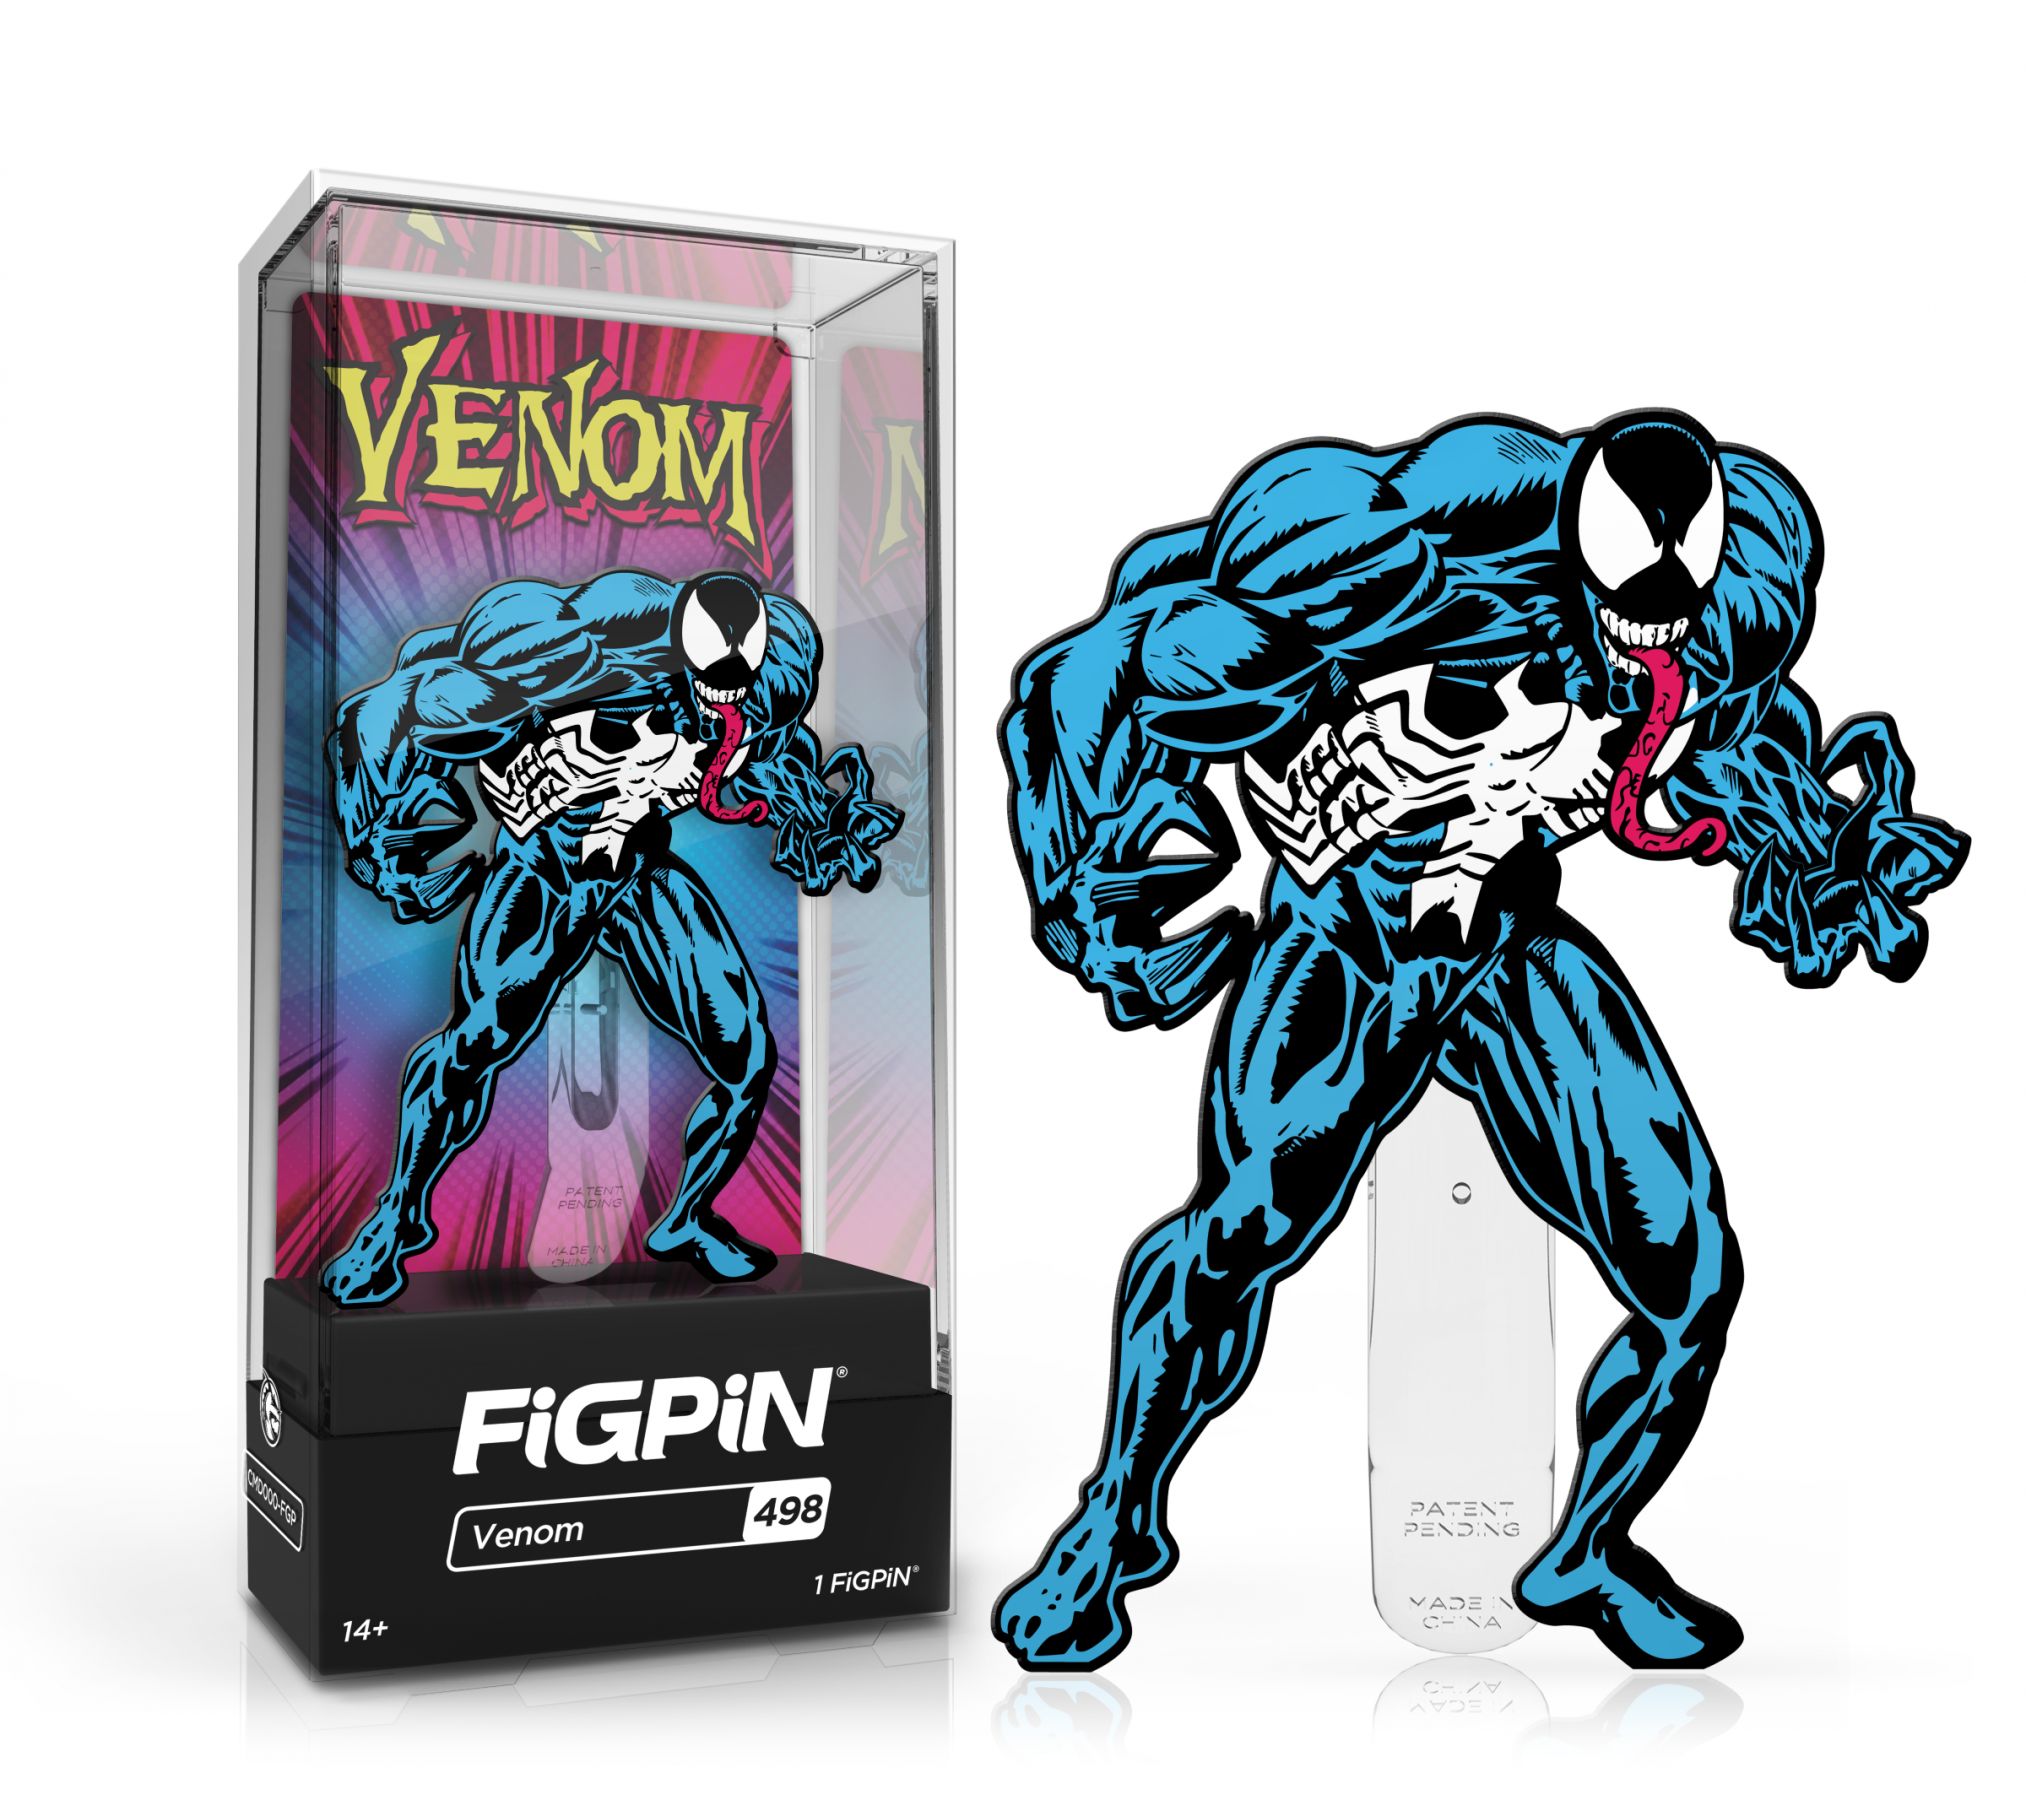 FiGPiN Venom (498) Collectable Enamel Pin MKONO1D93D |27861|